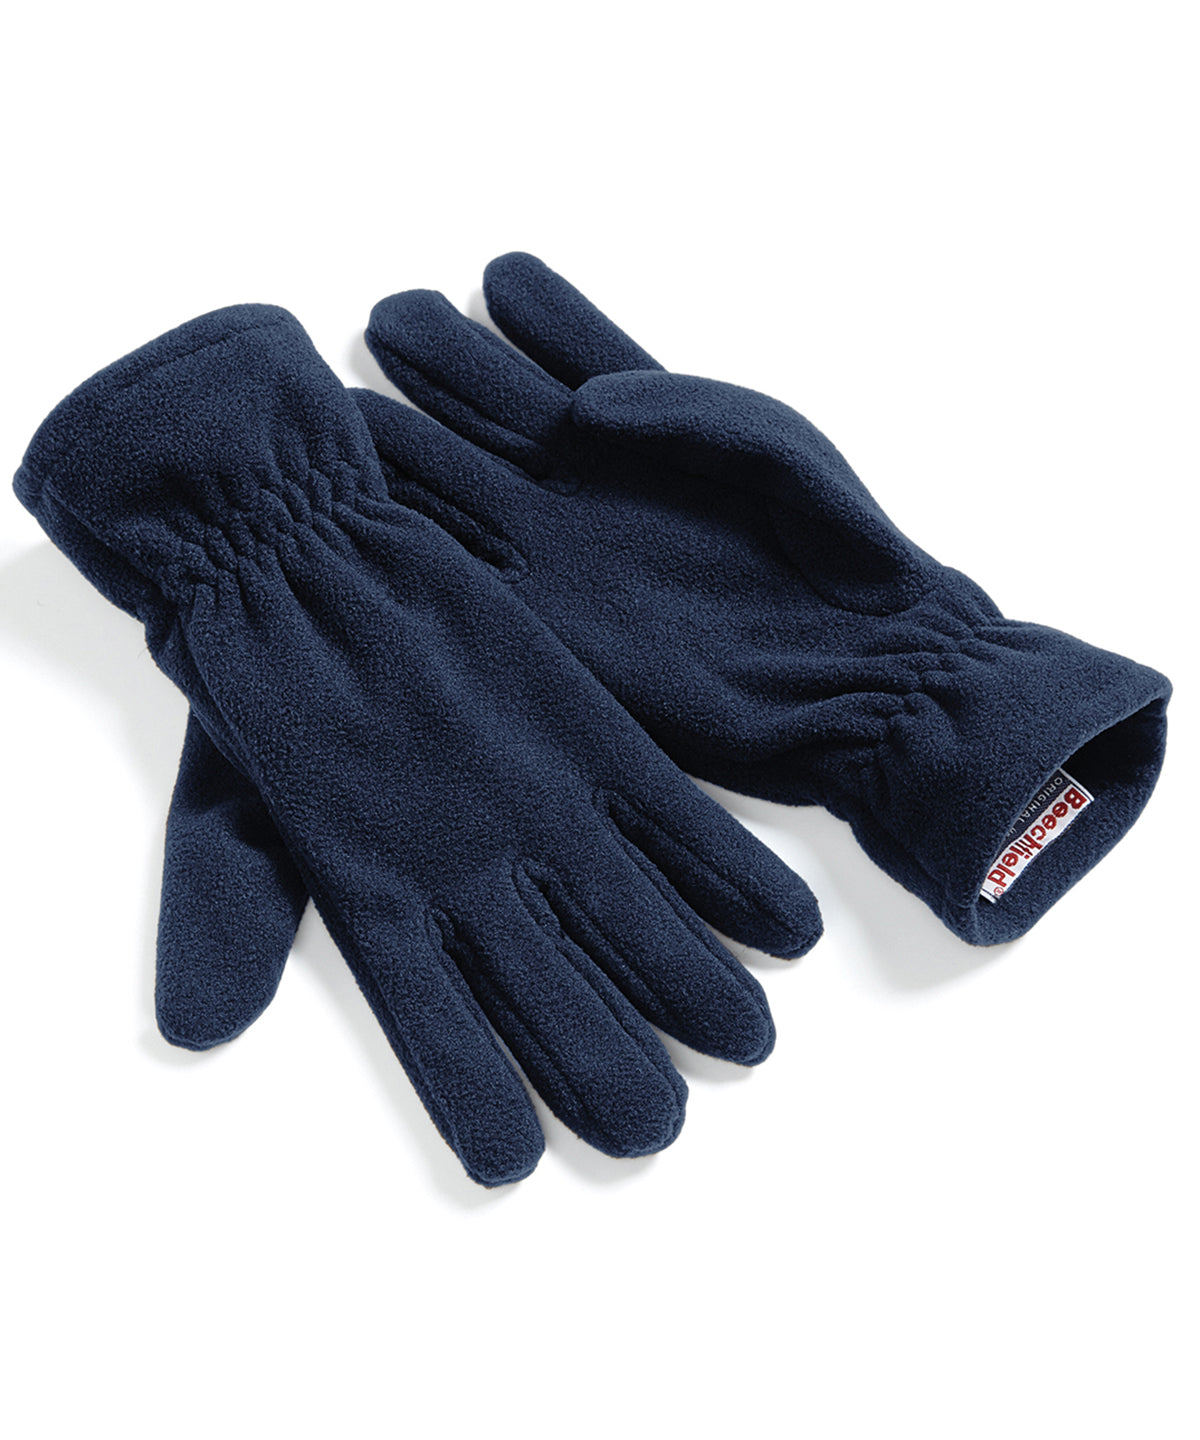 Personalised Gloves - Black Beechfield Suprafleece® alpine gloves